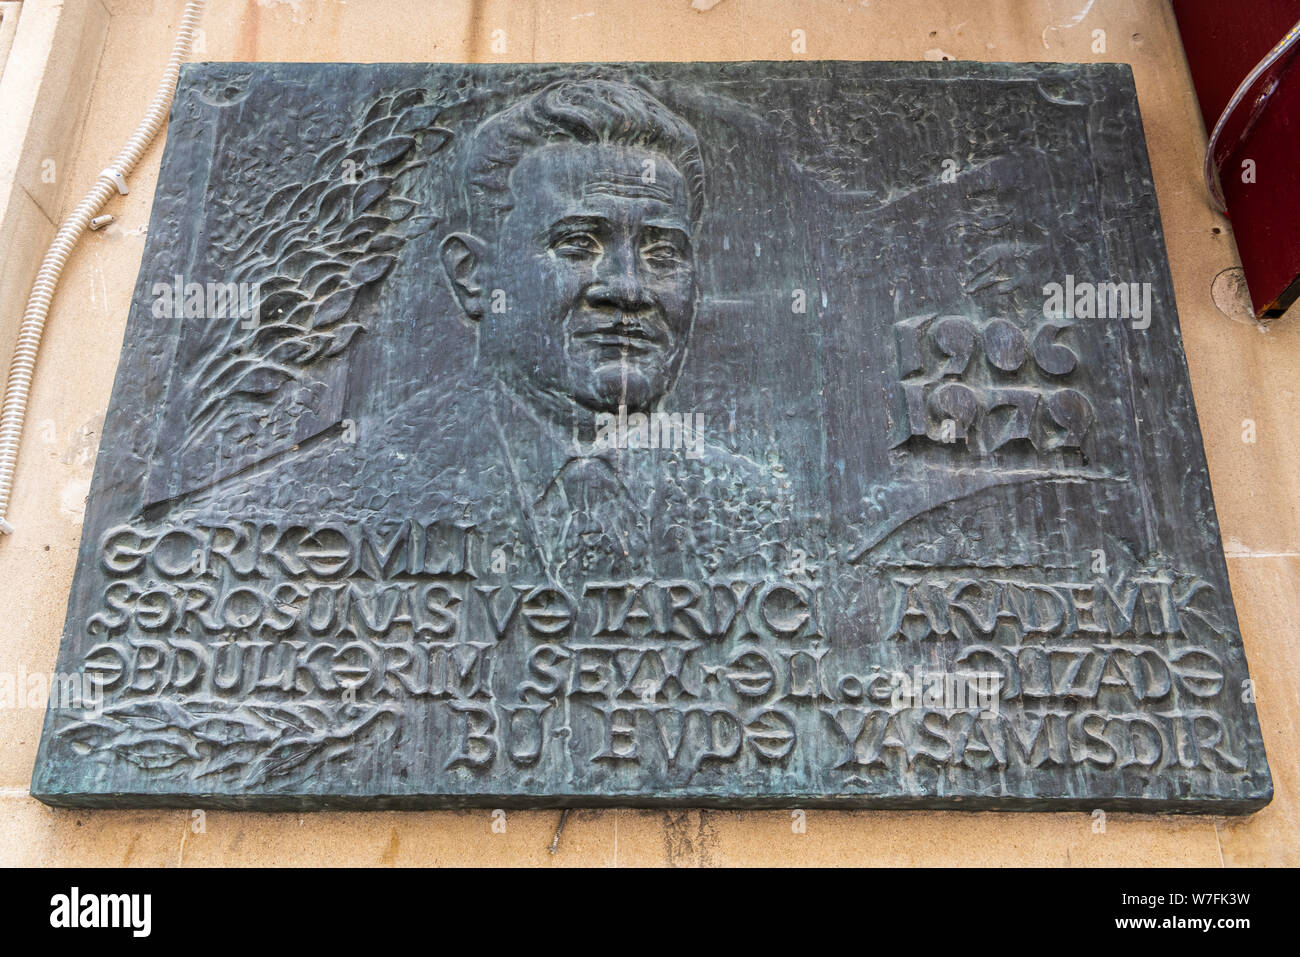 Baku in Azerbaijan - 1 maggio 2019. Targa commemorativa dedicata a azerbaigiano Abdulkerim orientalista Alizada, segnando la casa dove visse a Baku. Foto Stock